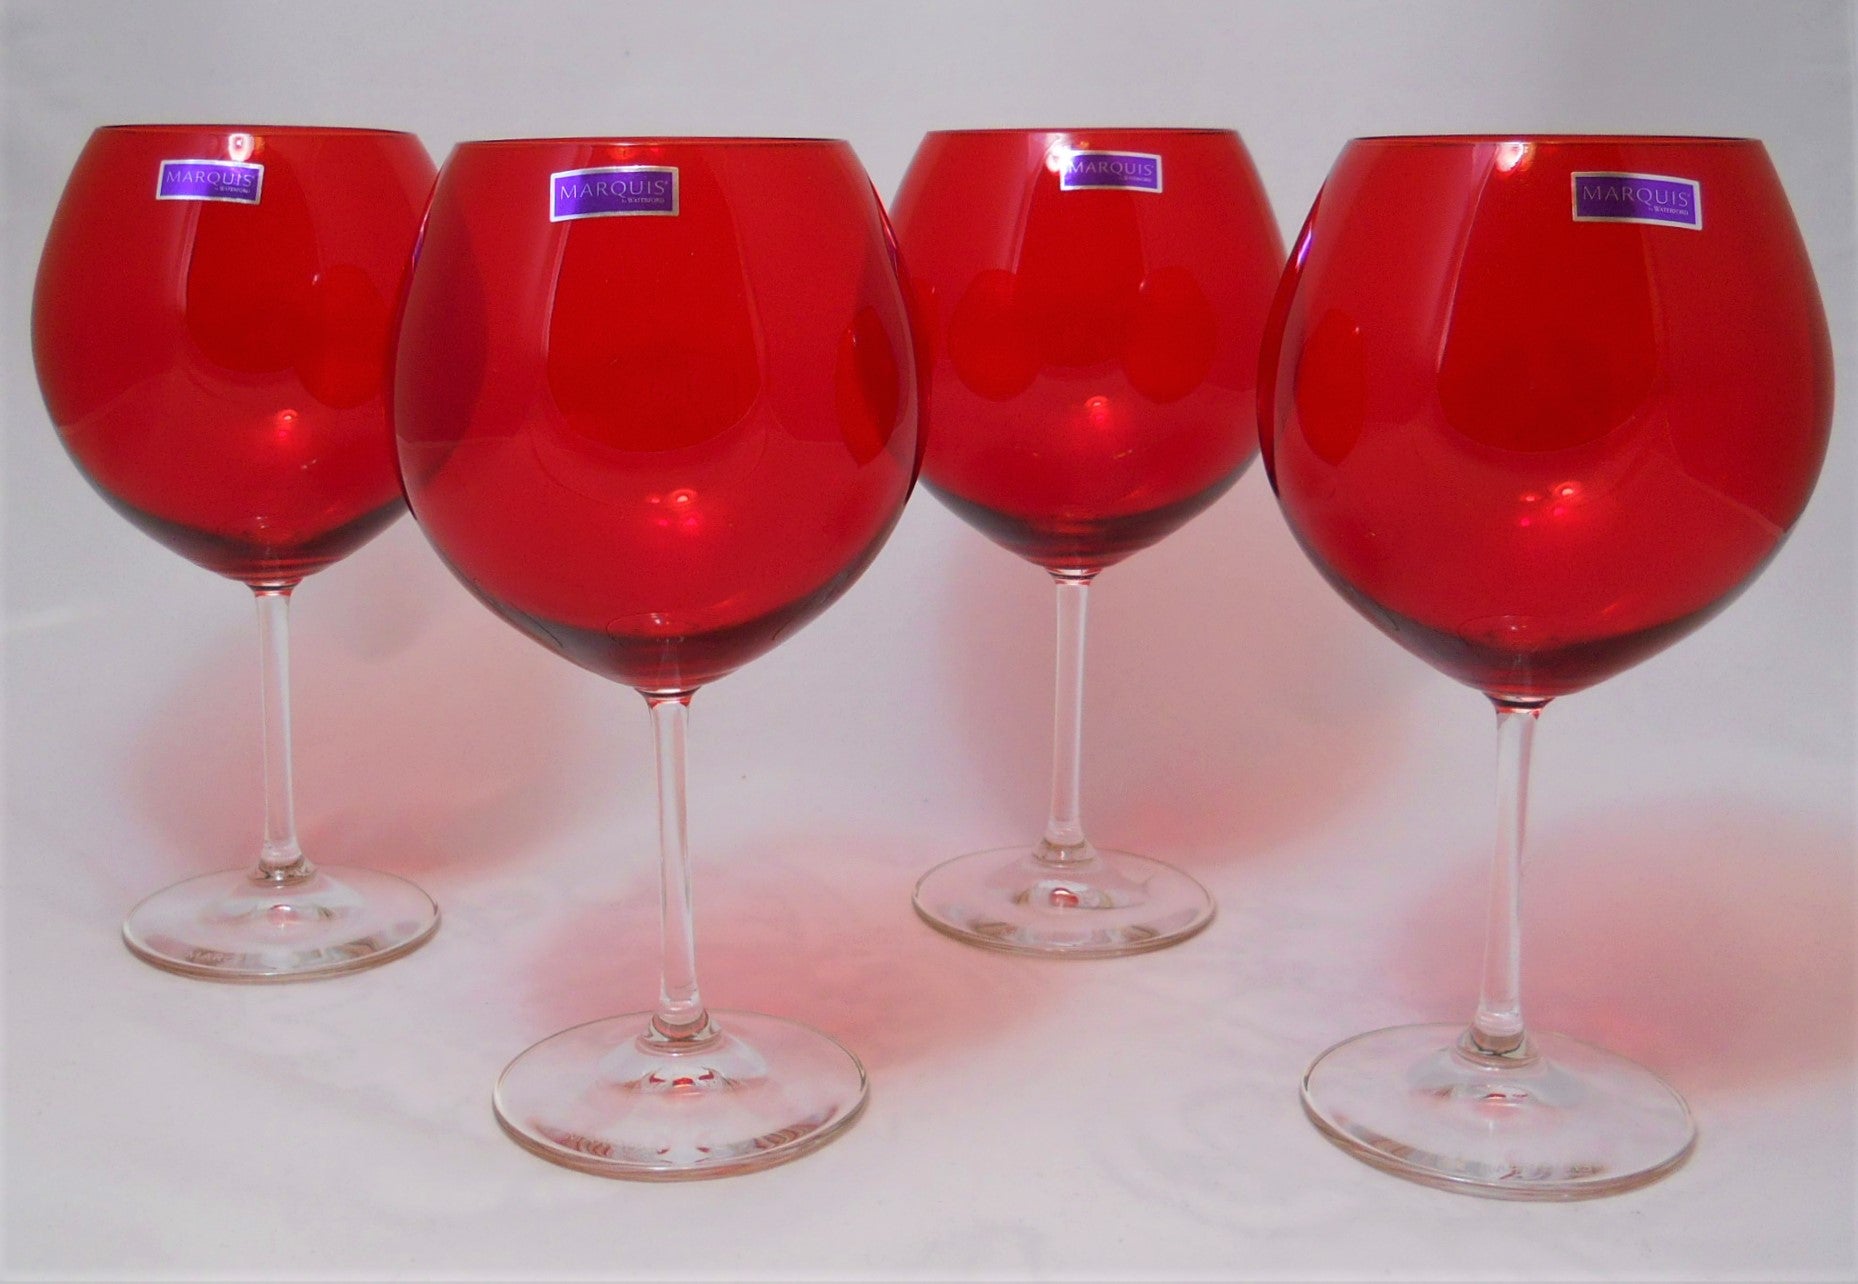 Bellini Balloon Wine Glass